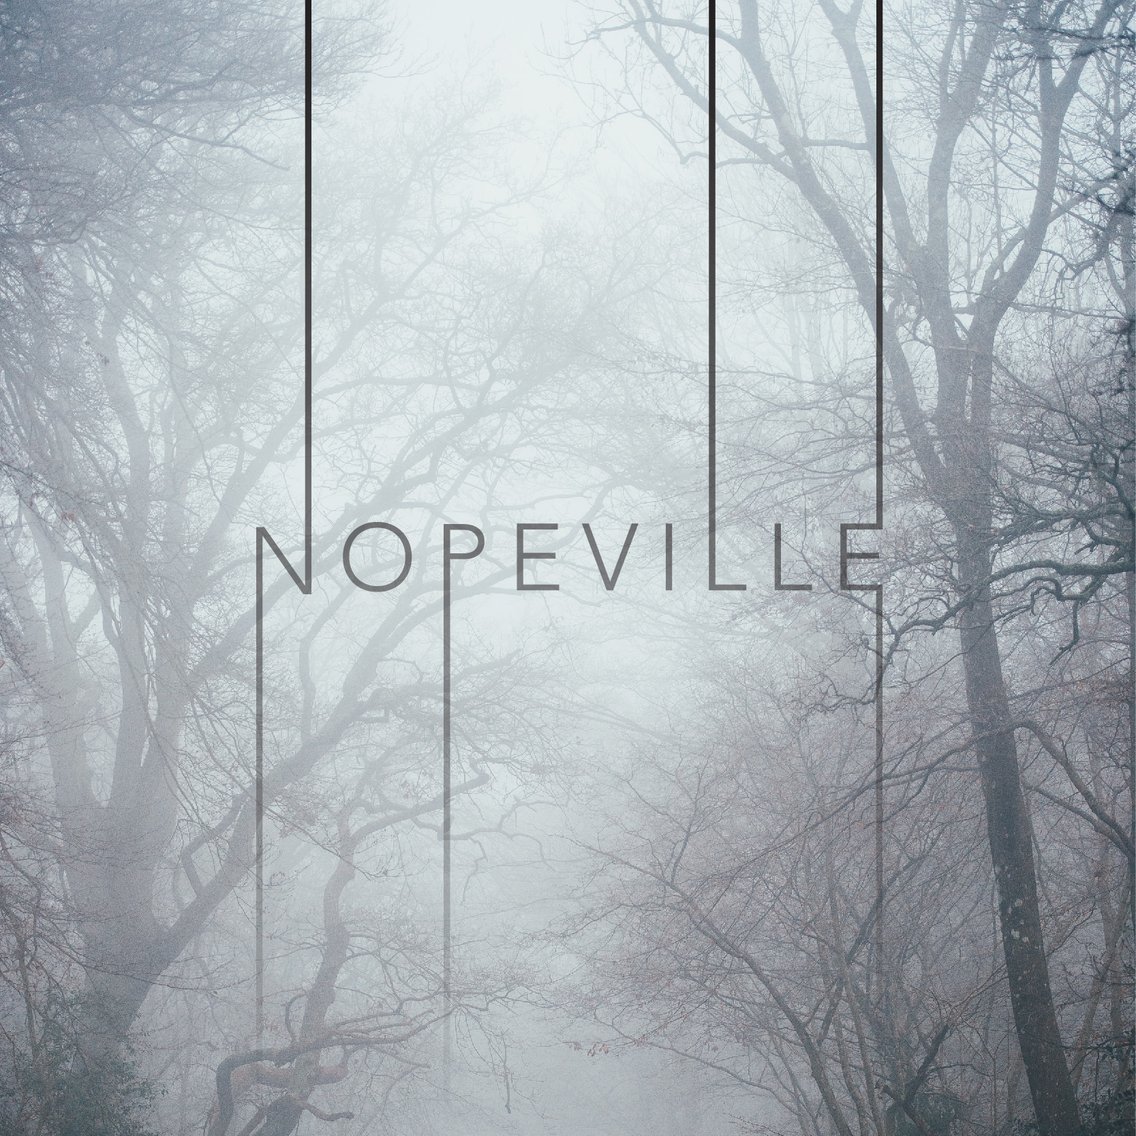 Nopeville - Cover Image